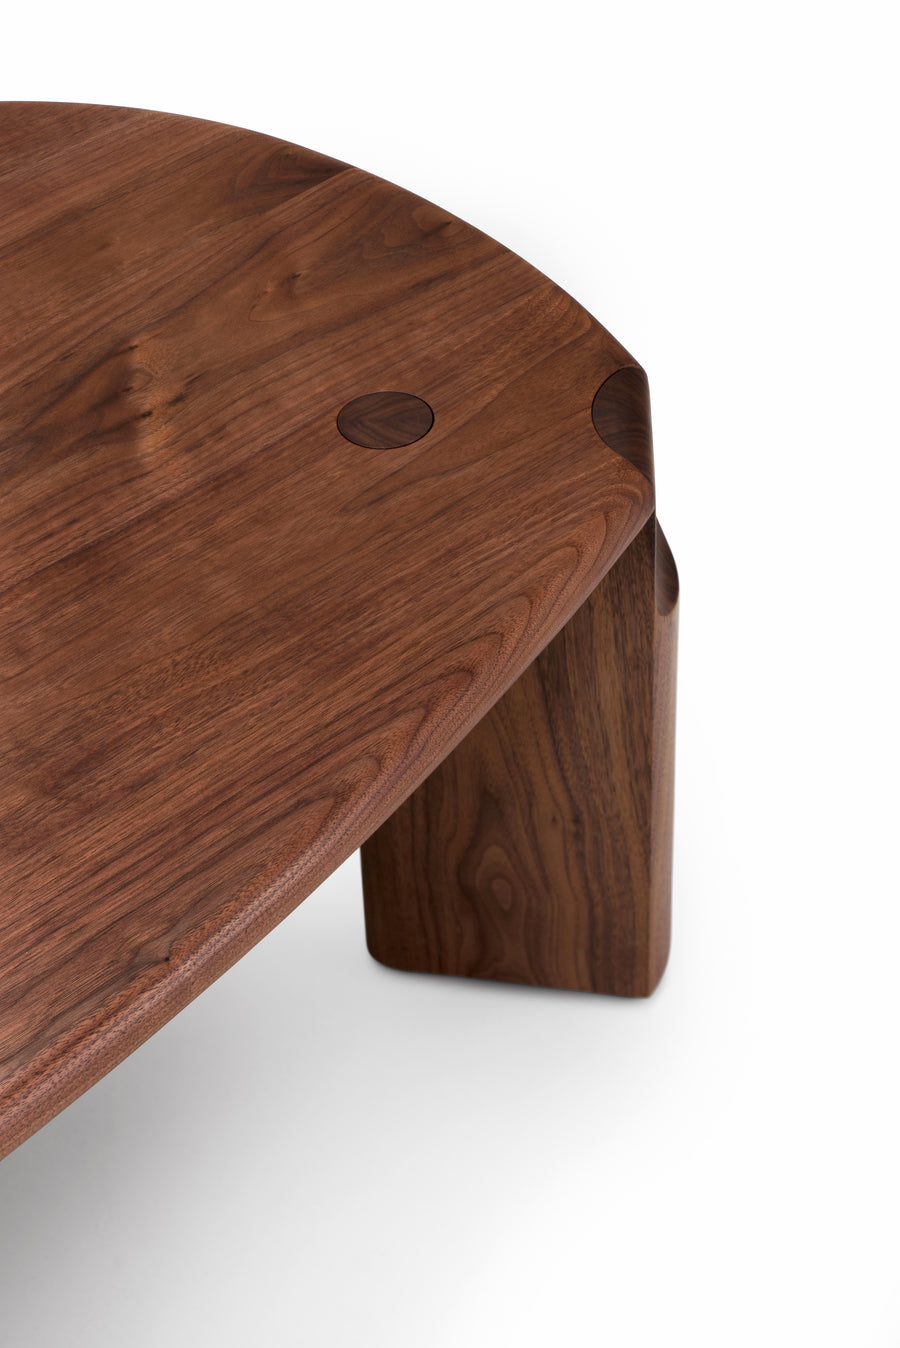 Twenty-Five Coffee Table with Wood Top